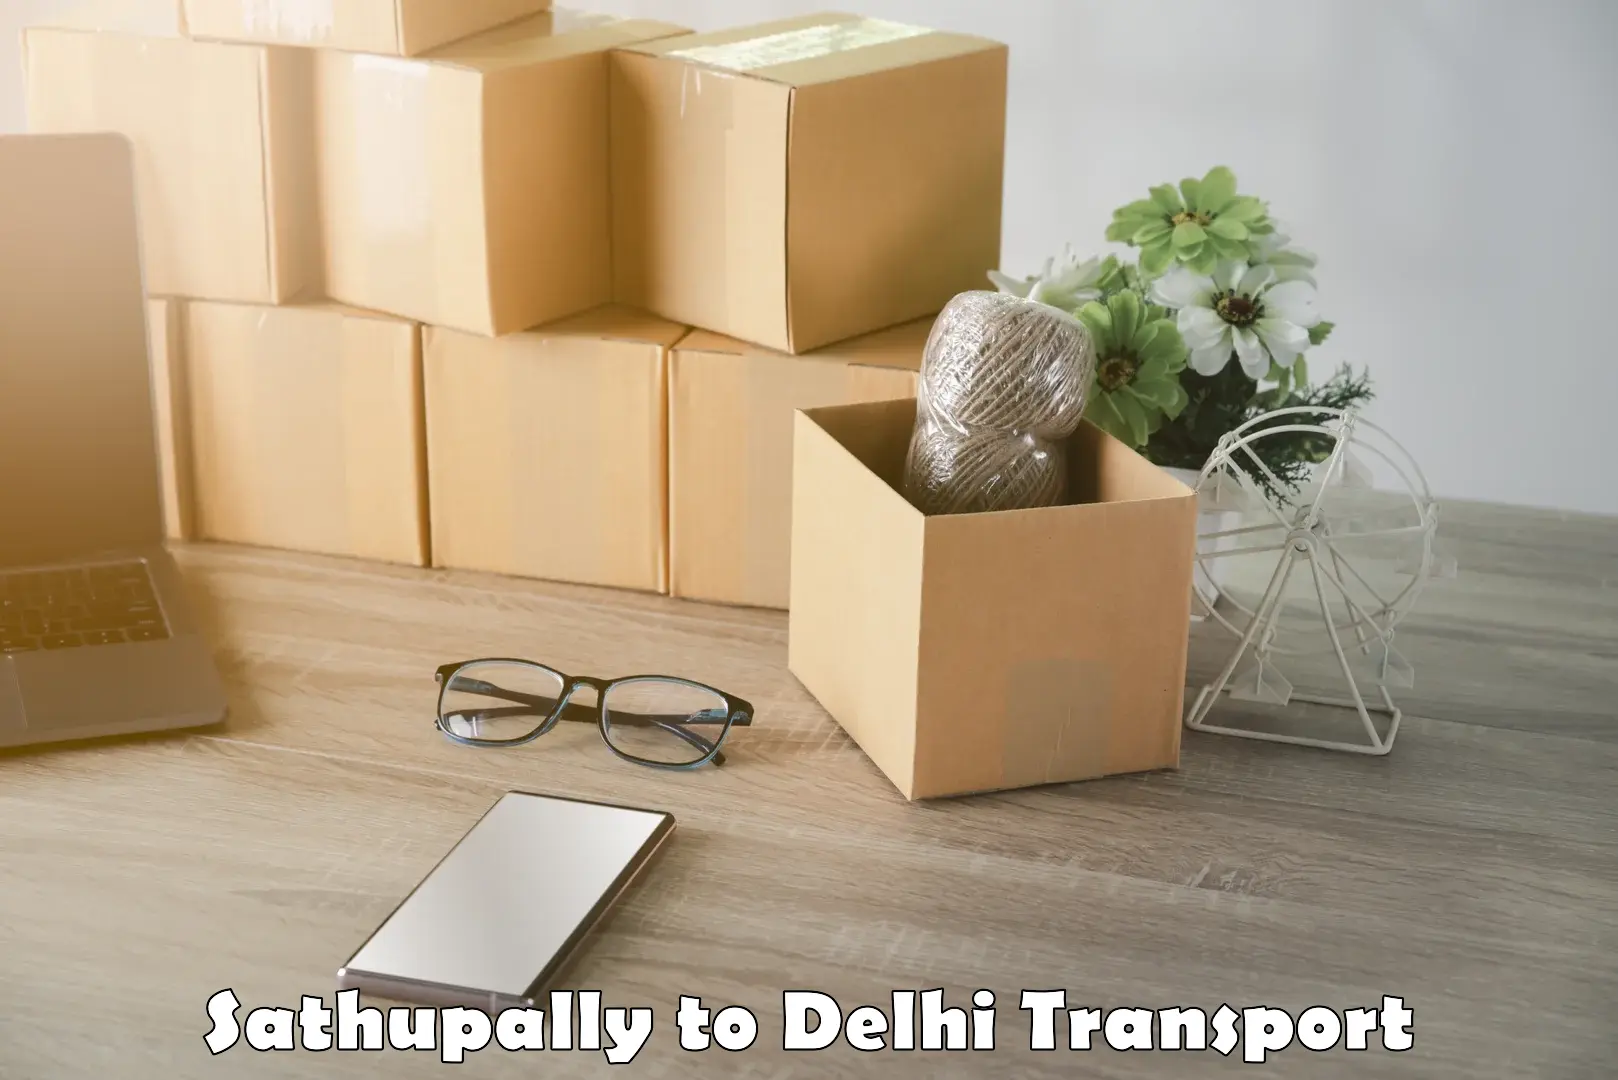 Online transport service Sathupally to Delhi